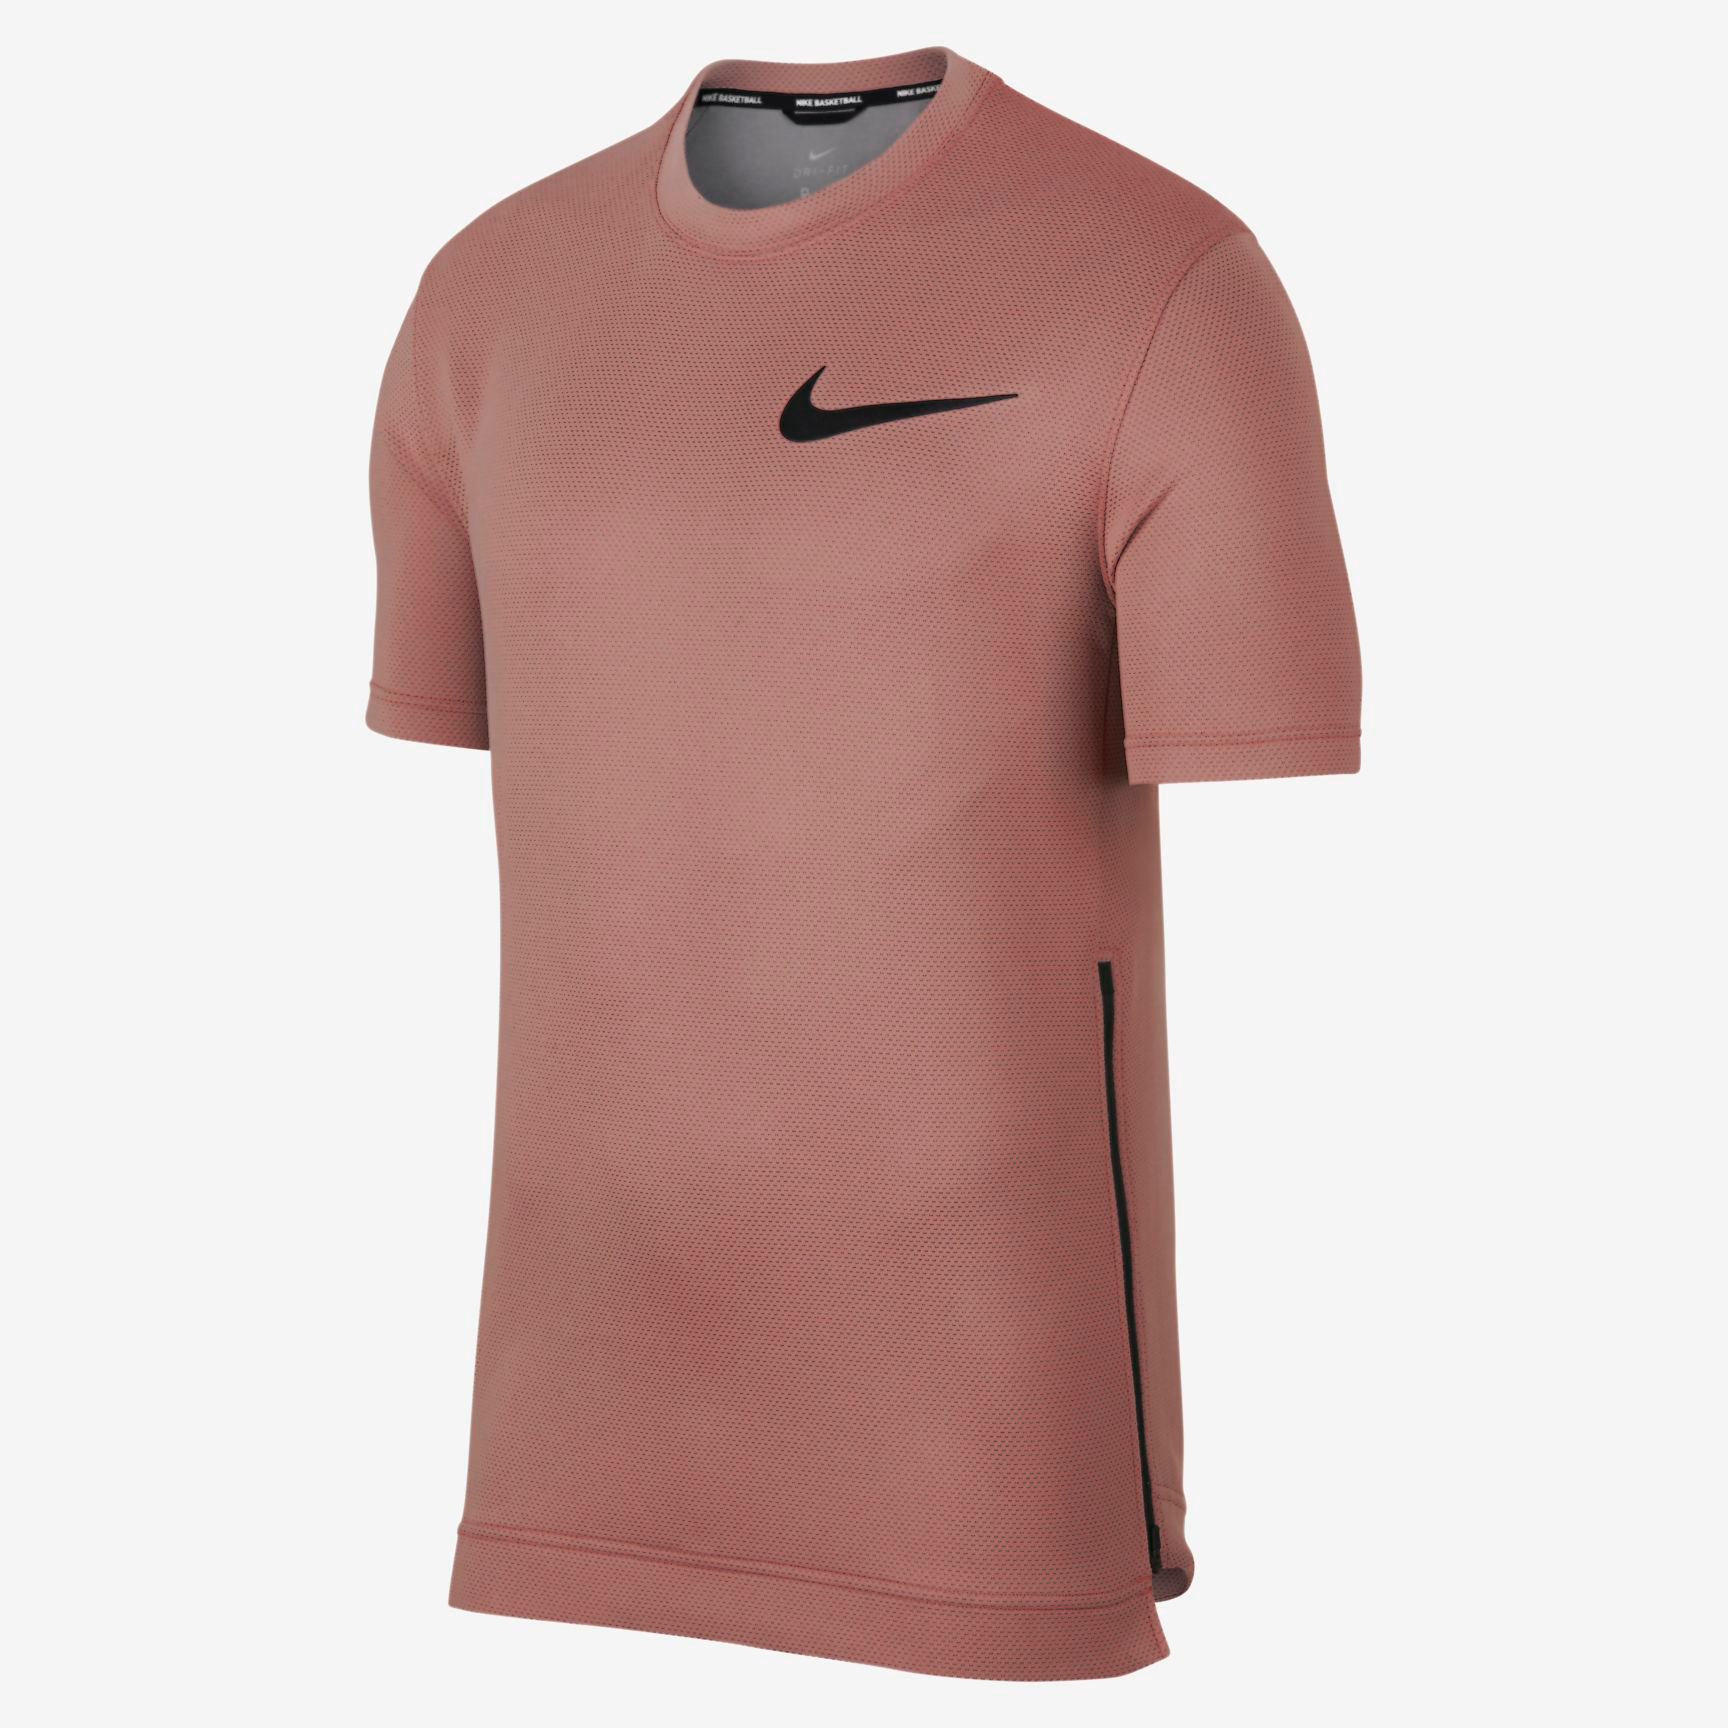 rust pink foamposites shirts